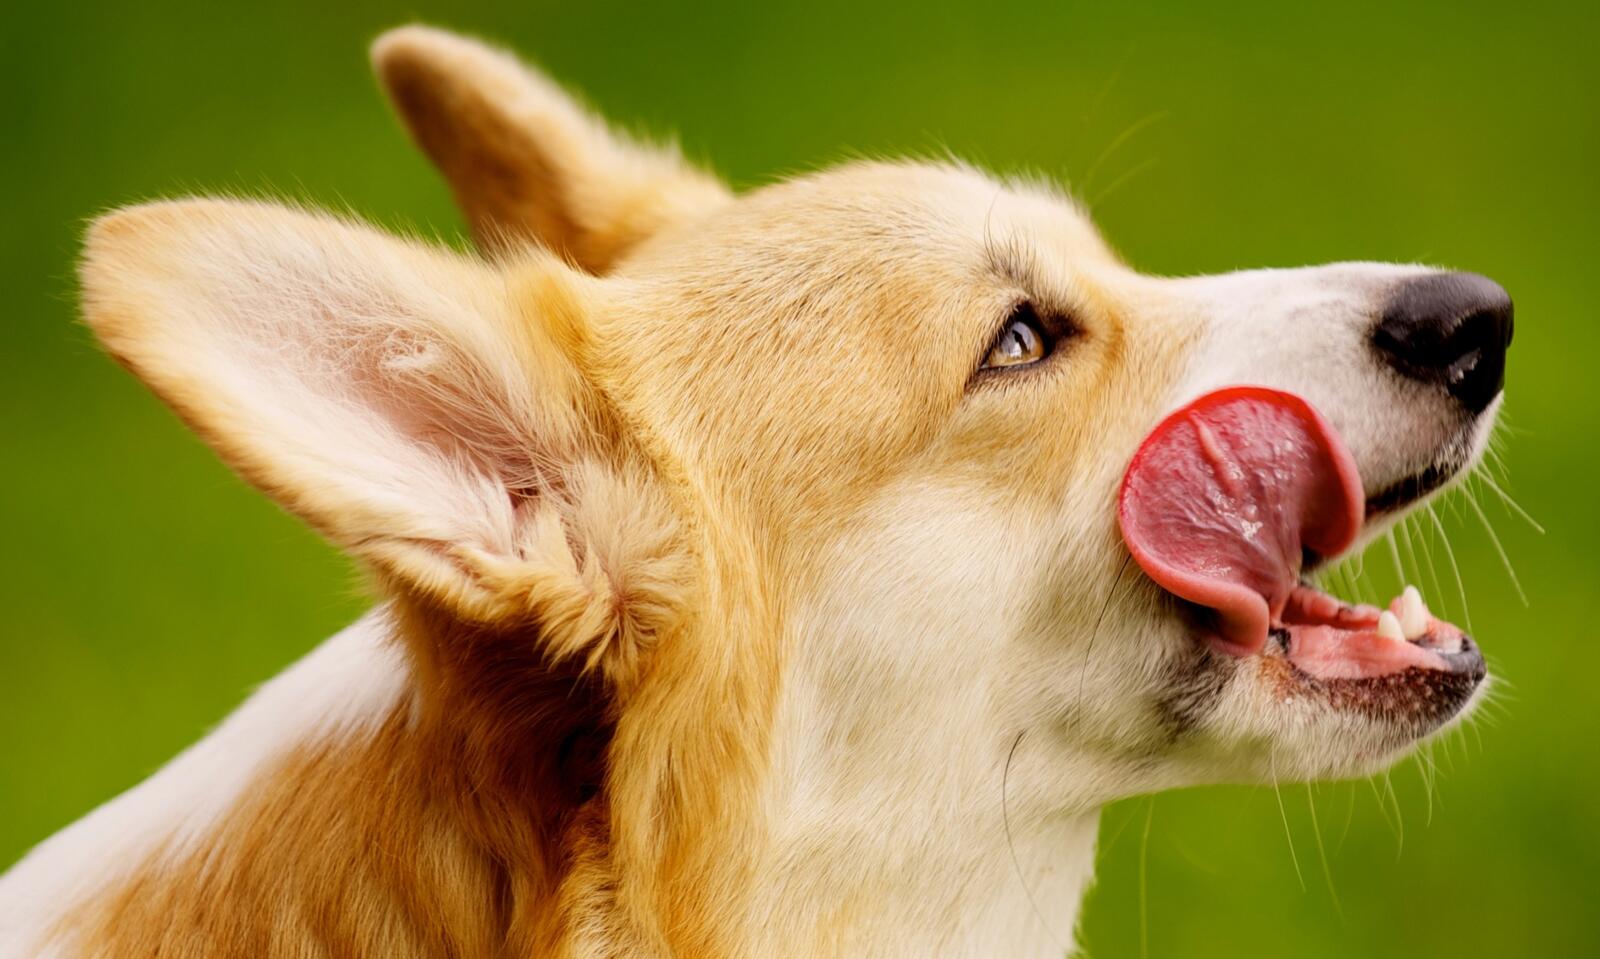 Free photo The corgi dog is licking